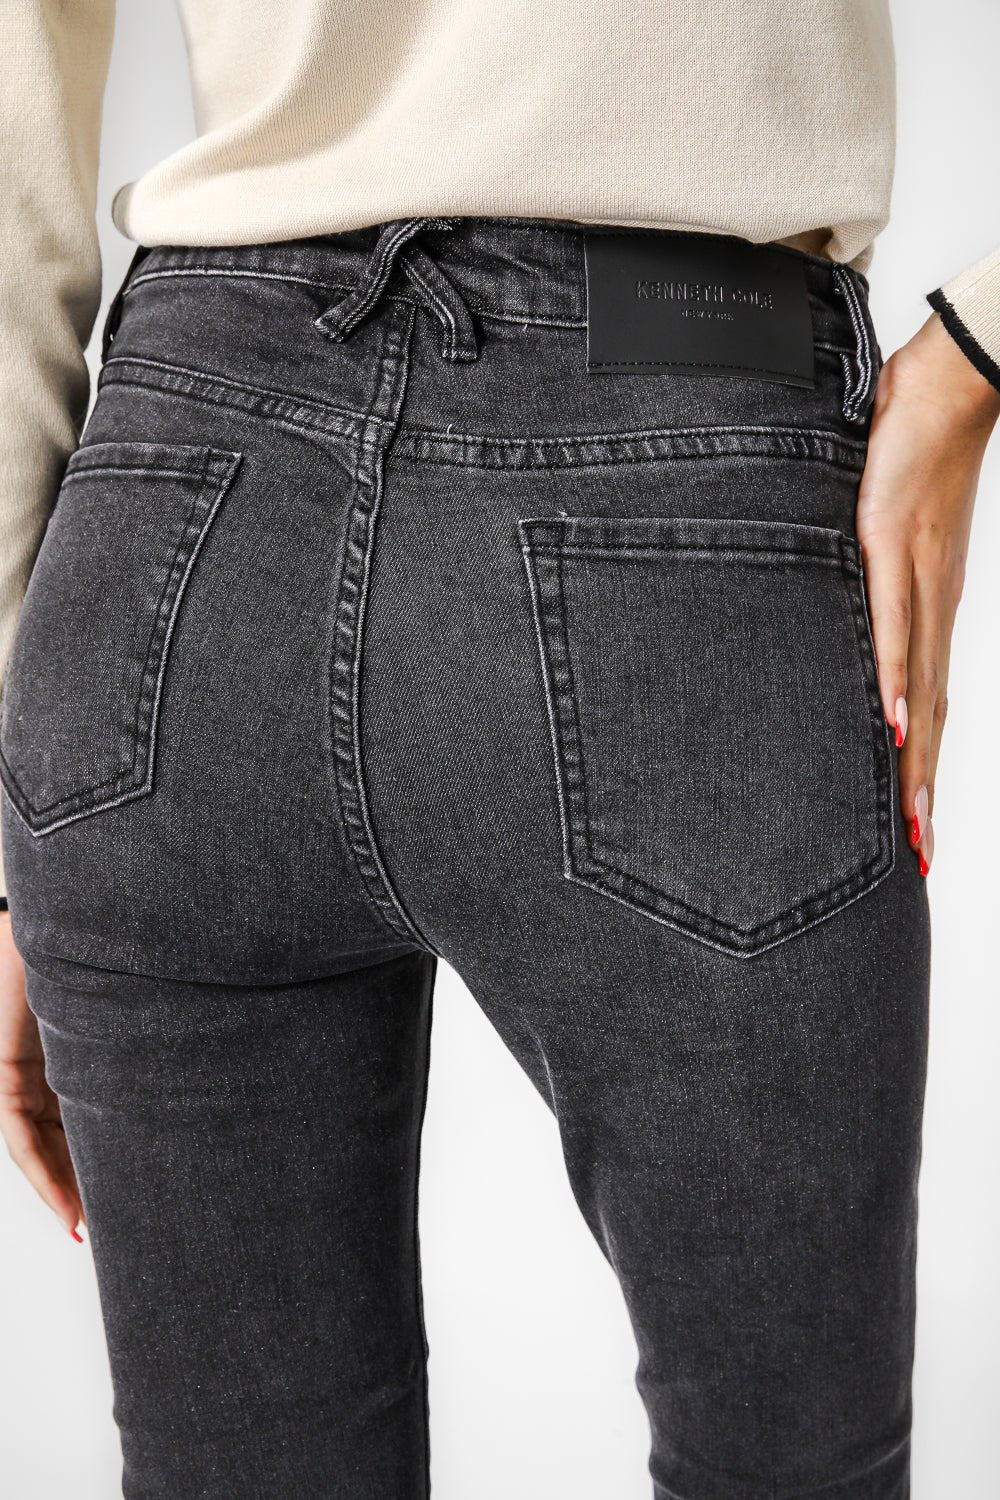 KENNETH COLE - מכנס ג'ינס SKINNY שחור - MASHBIR//365